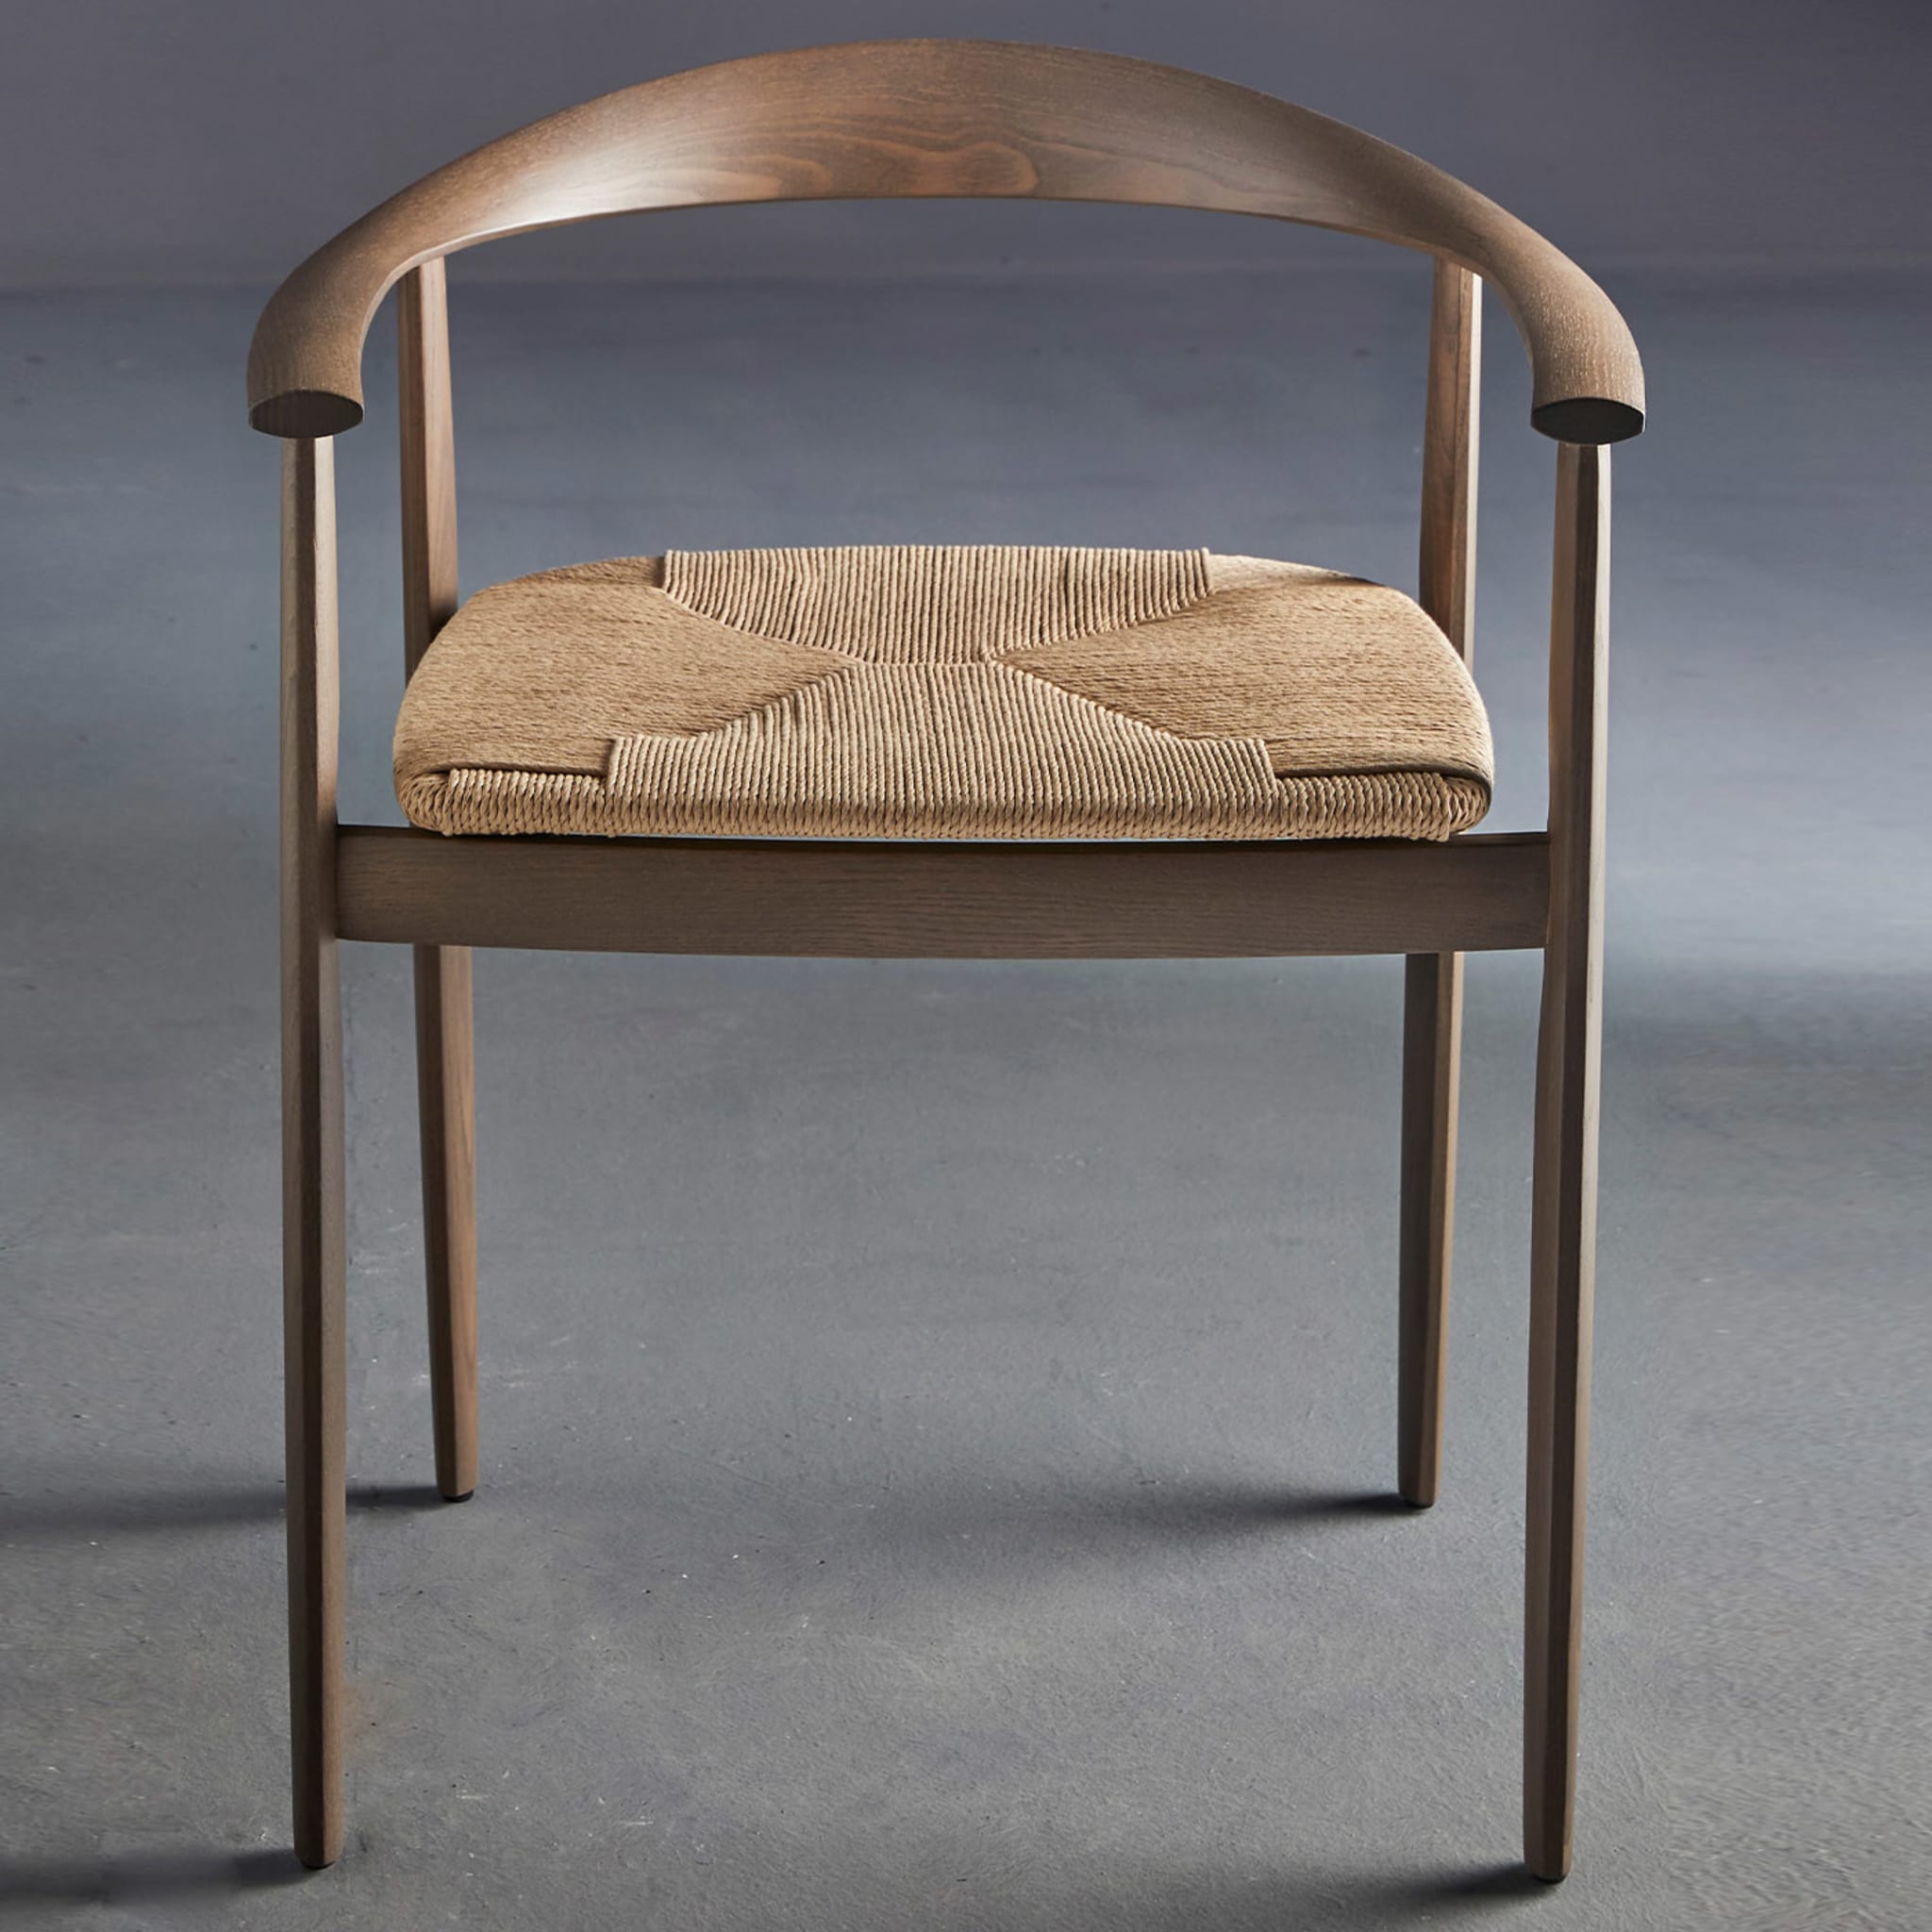 Odyssée Brown Armchair with Straw Seat by P. Borgonovo - Alternative view 1